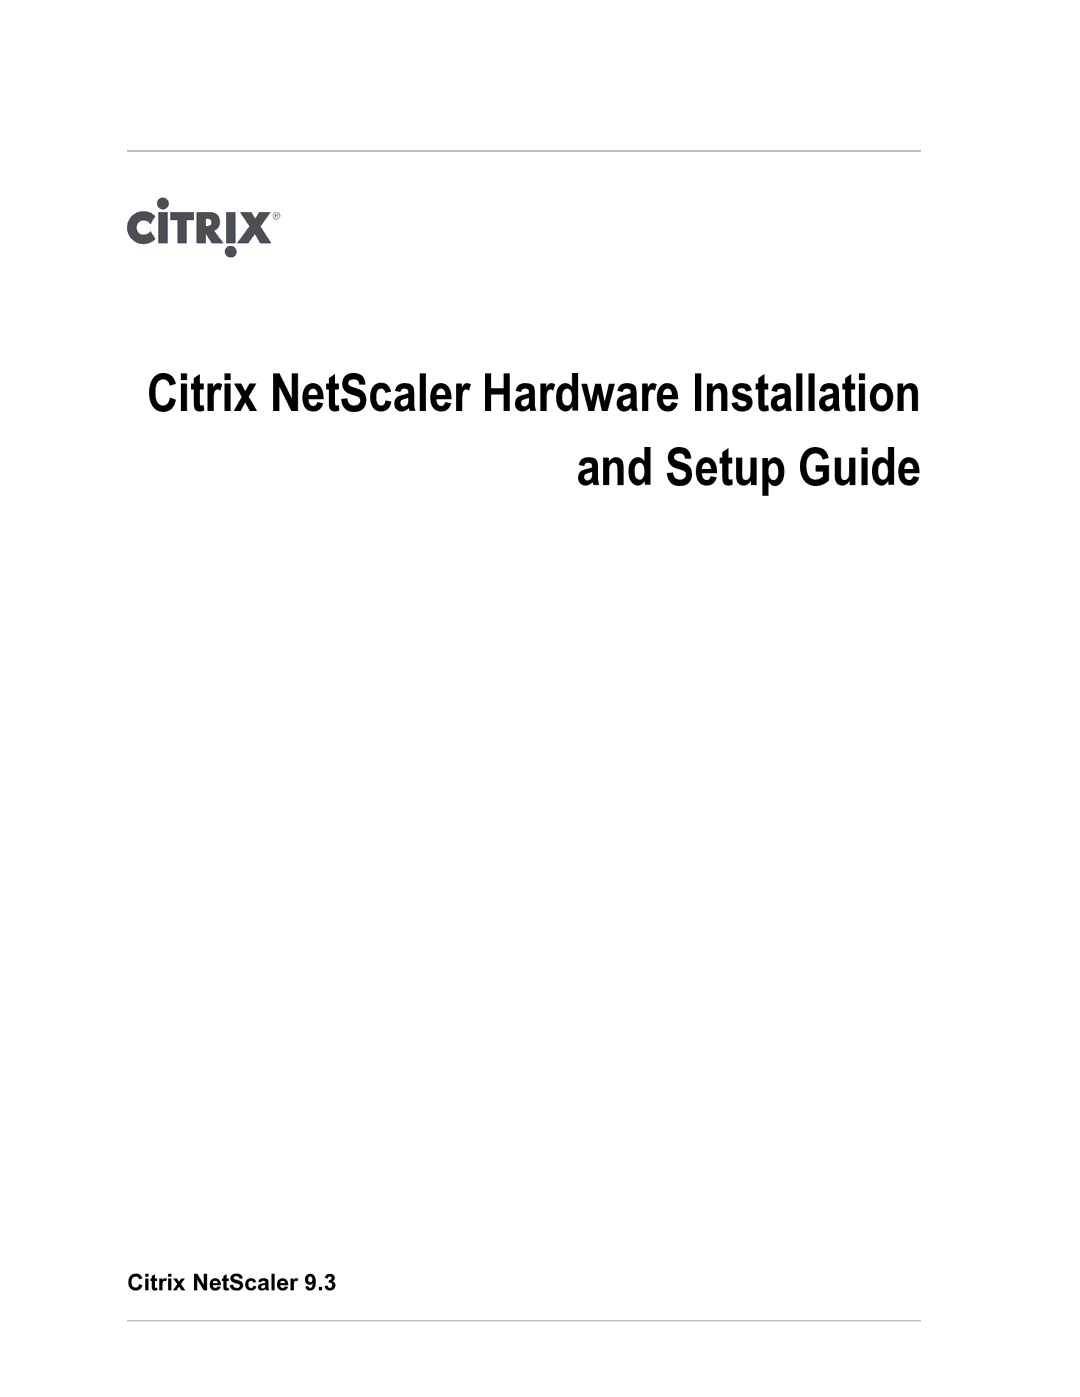 Citrix Systems 9.3 setup guide Citrix NetScaler Hardware Installation and Setup Guide 